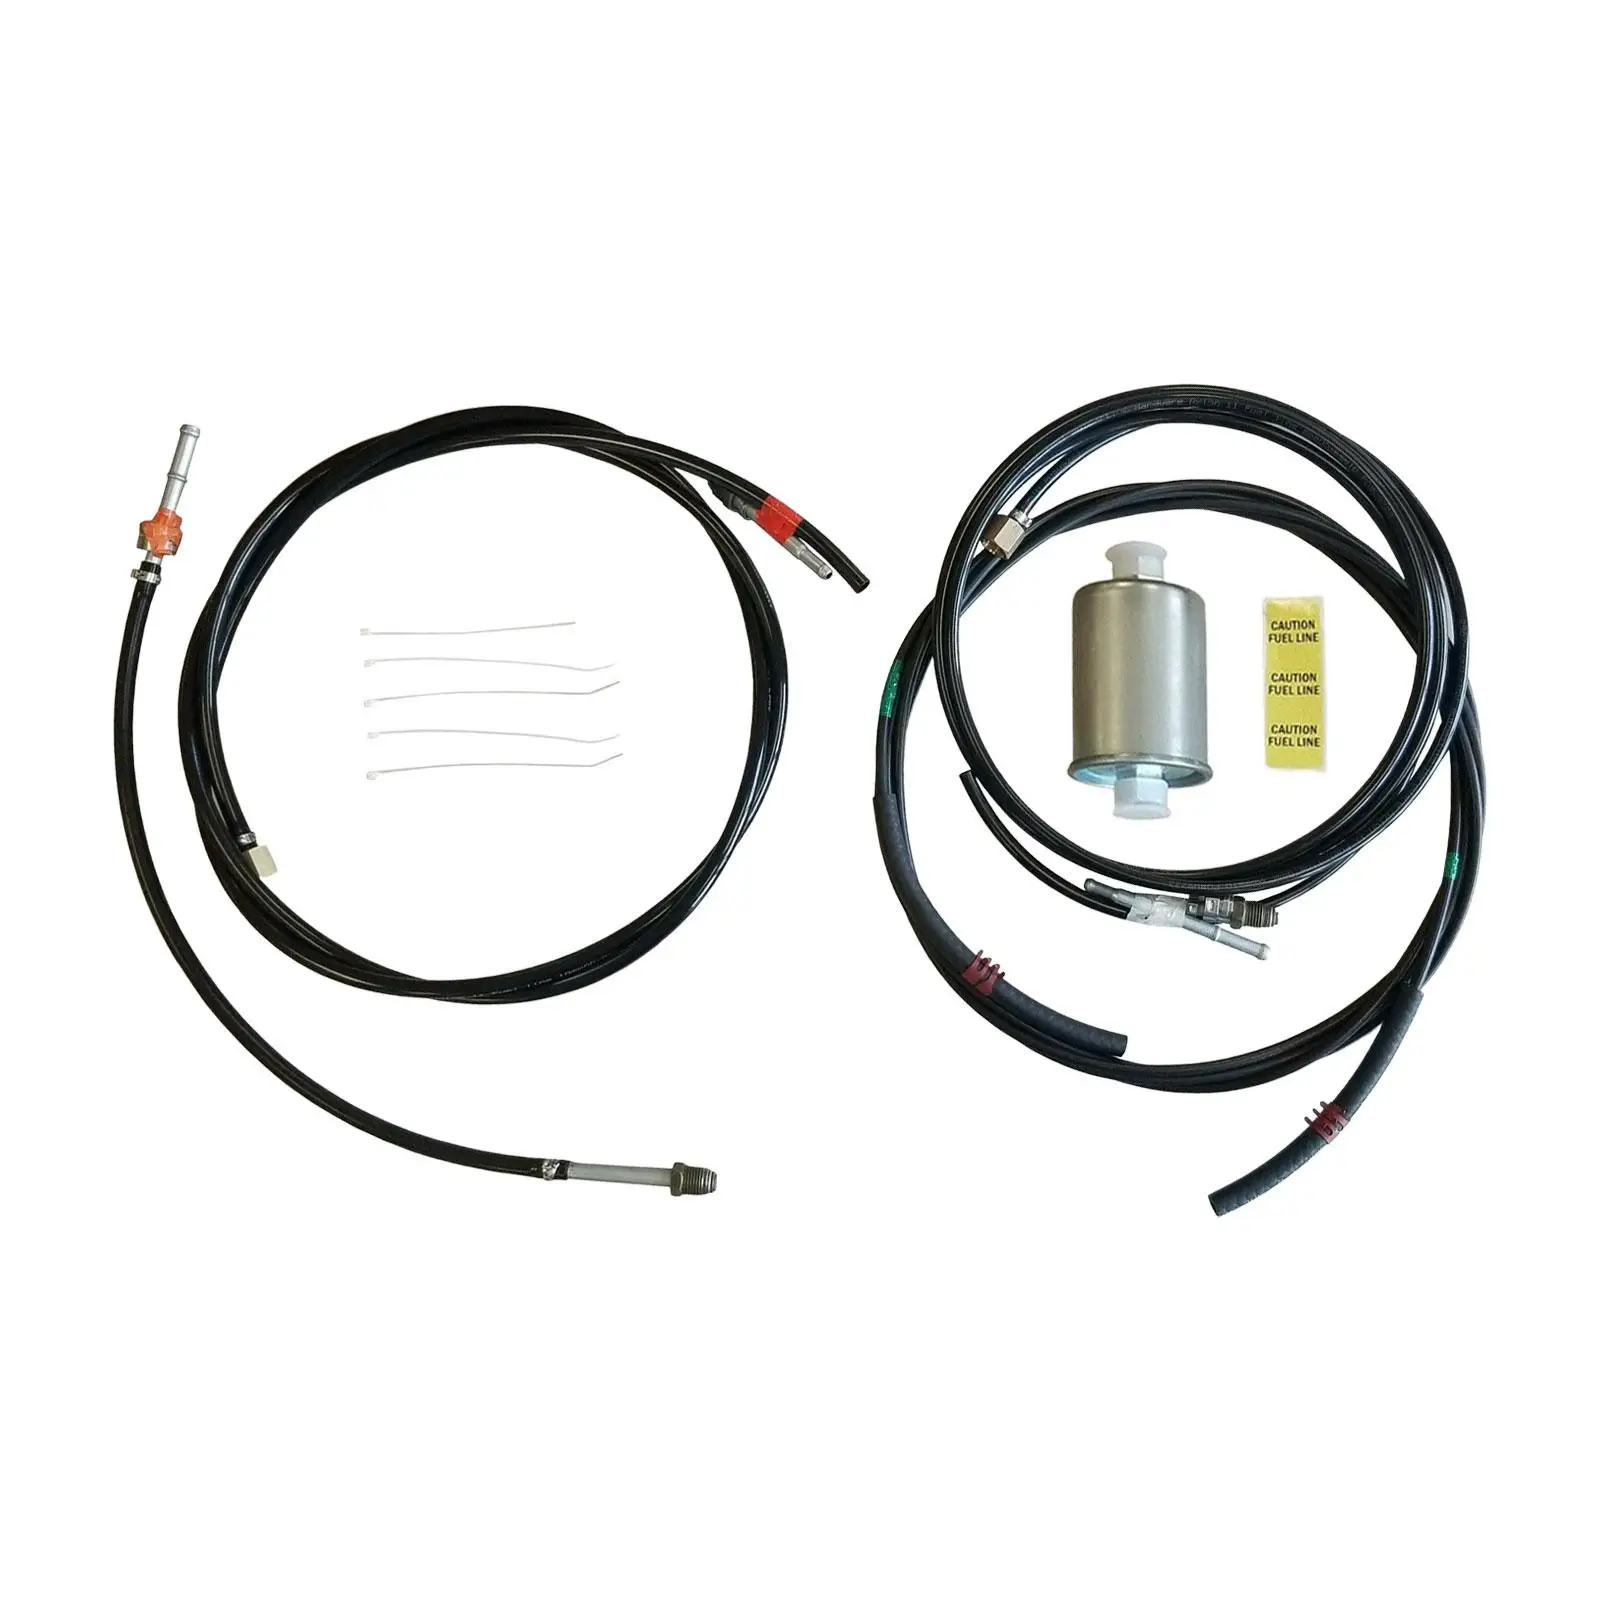 

Fuel Line Kit Automotive Parts Nfr0013 Durable Repair Parts Professional Replacement Tube Set Stable Performance